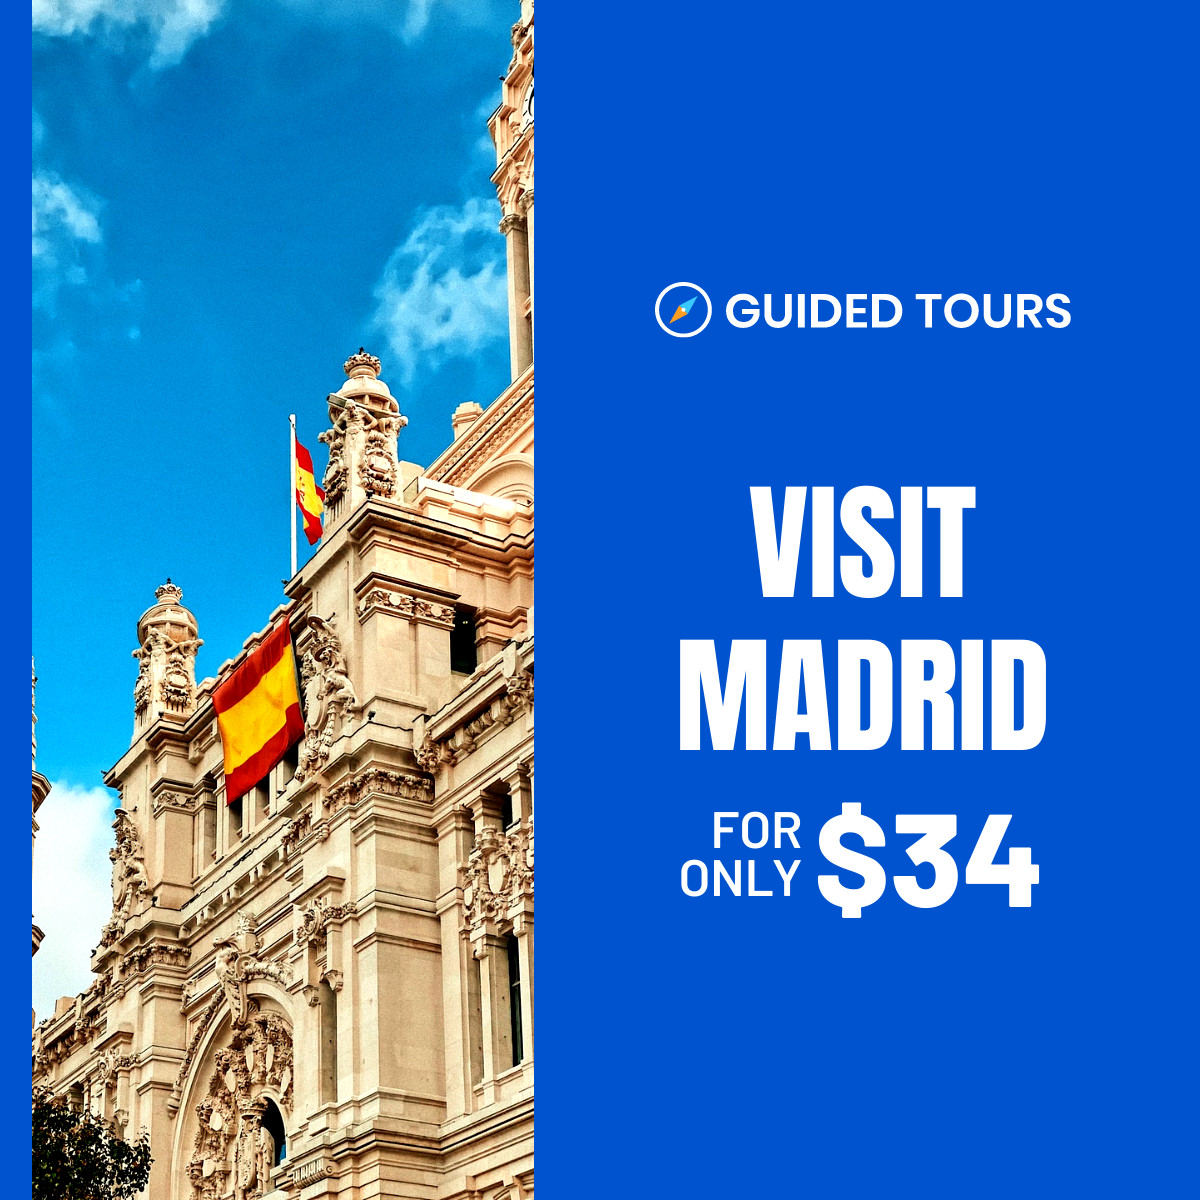 Visit Madrid with Promo Price